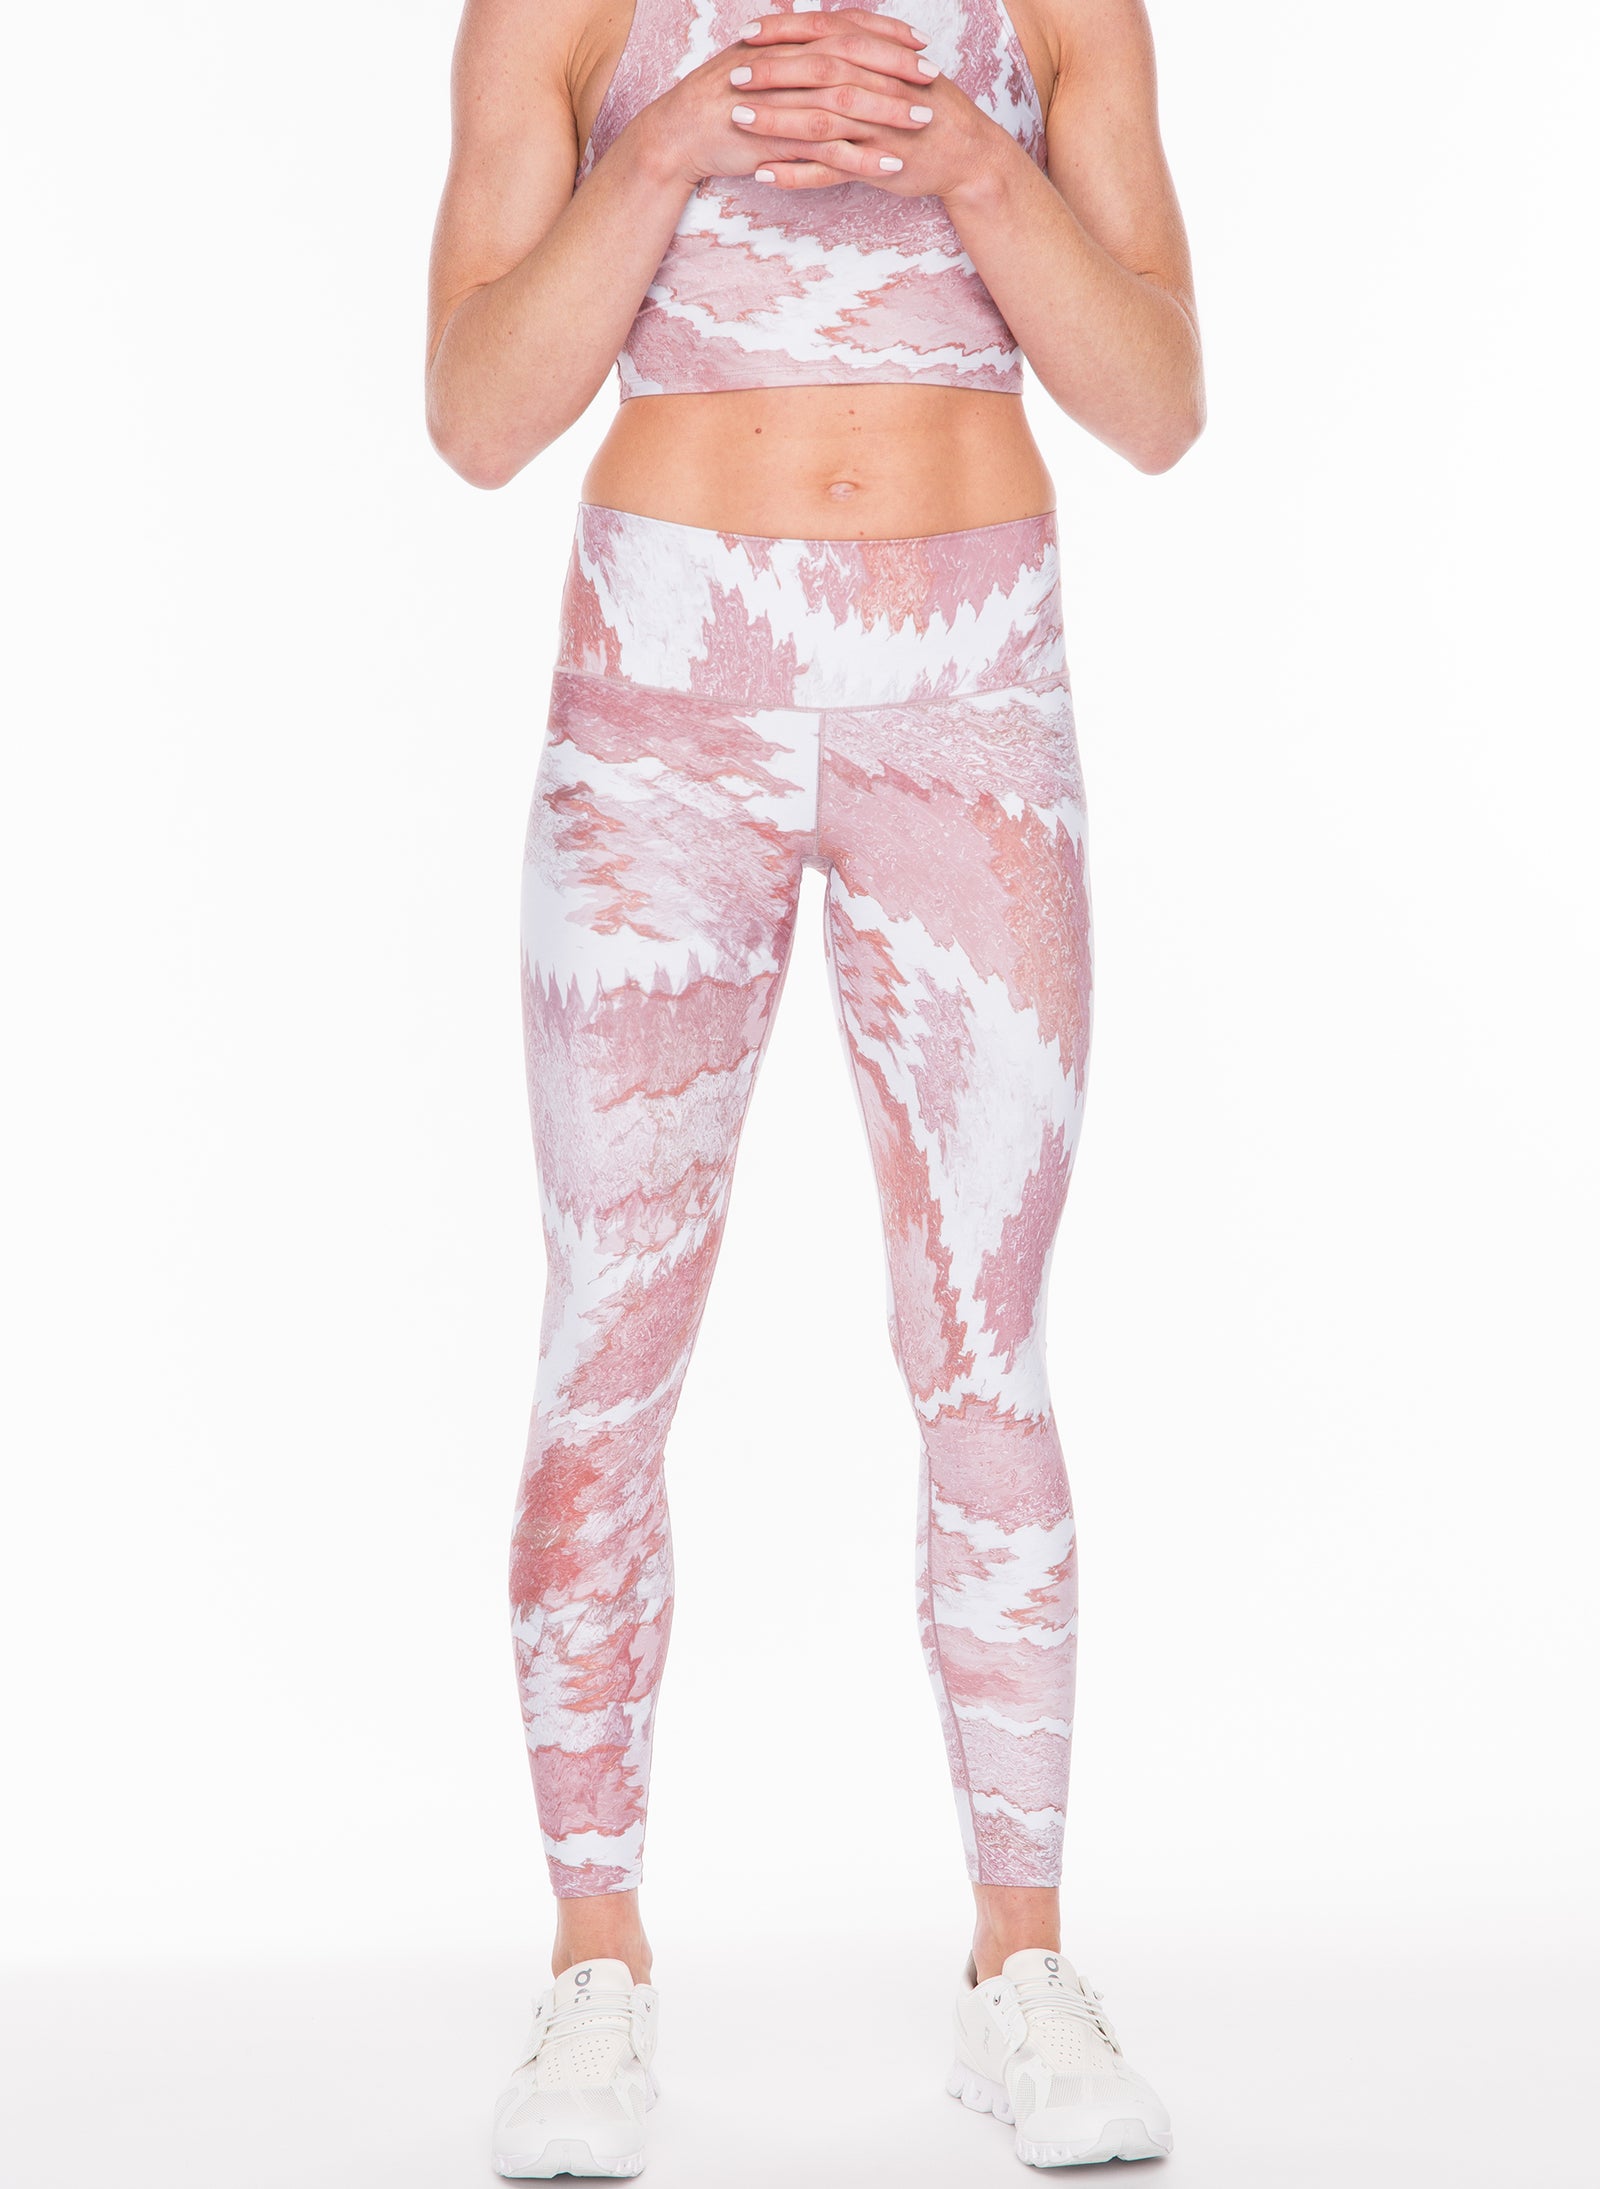 Victoria secret Pink yoga pants. Size xs